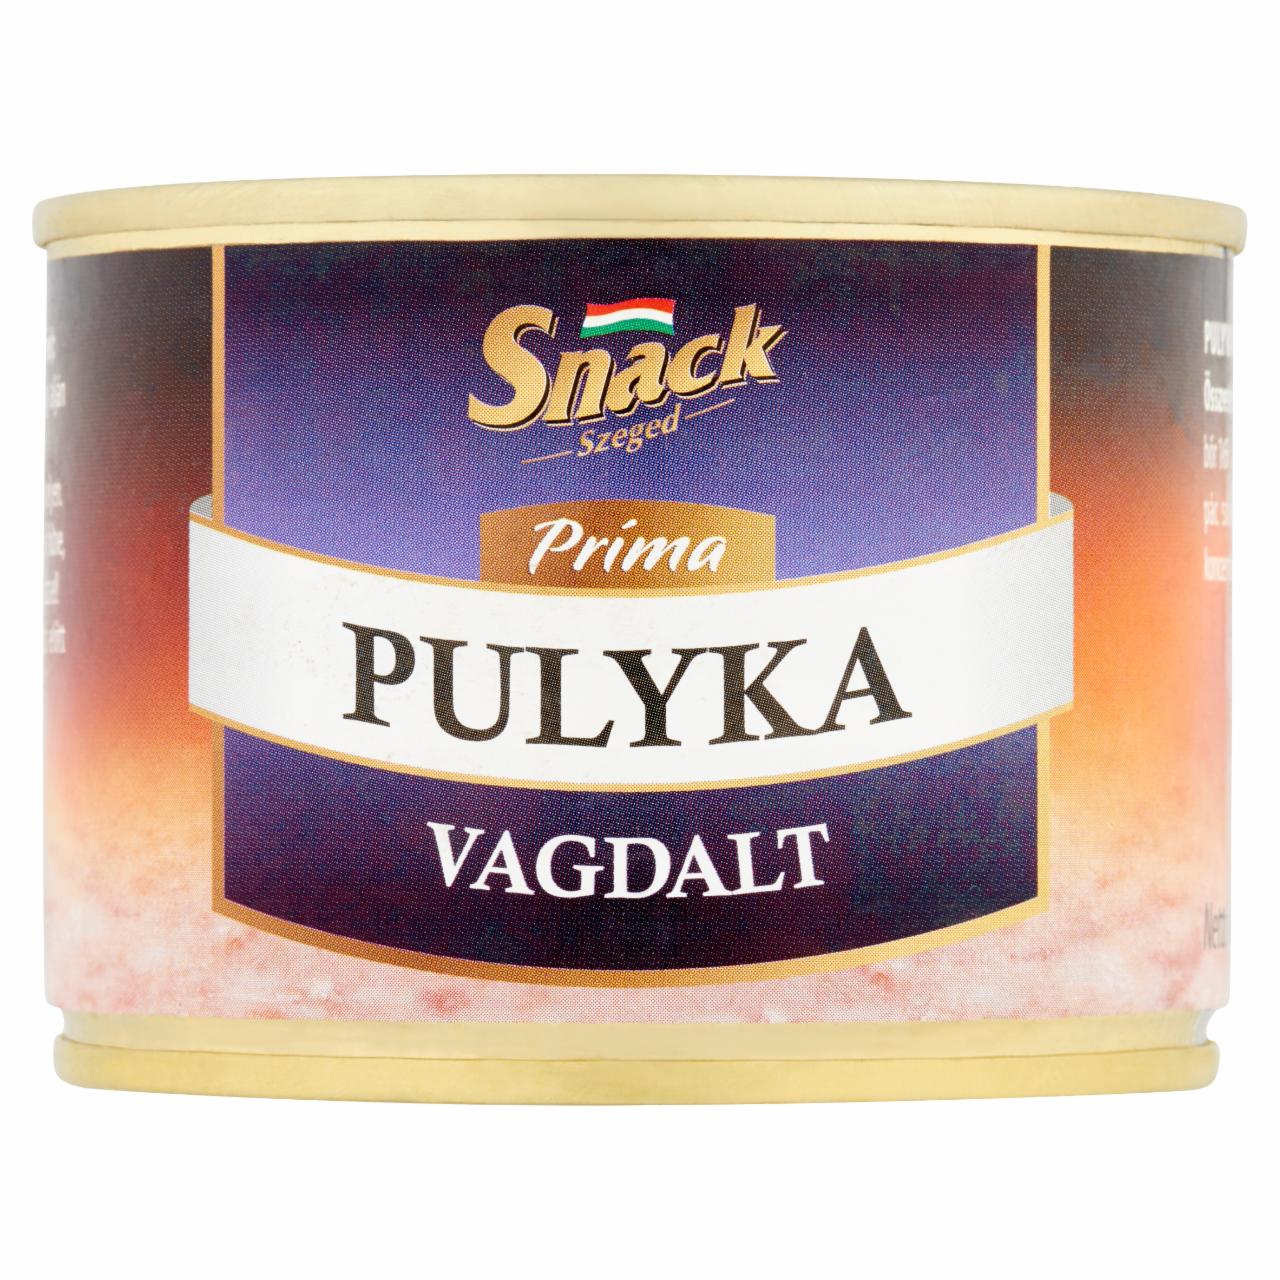 Képek - Snack Szeged Príma pulyka vagdalt 190 g